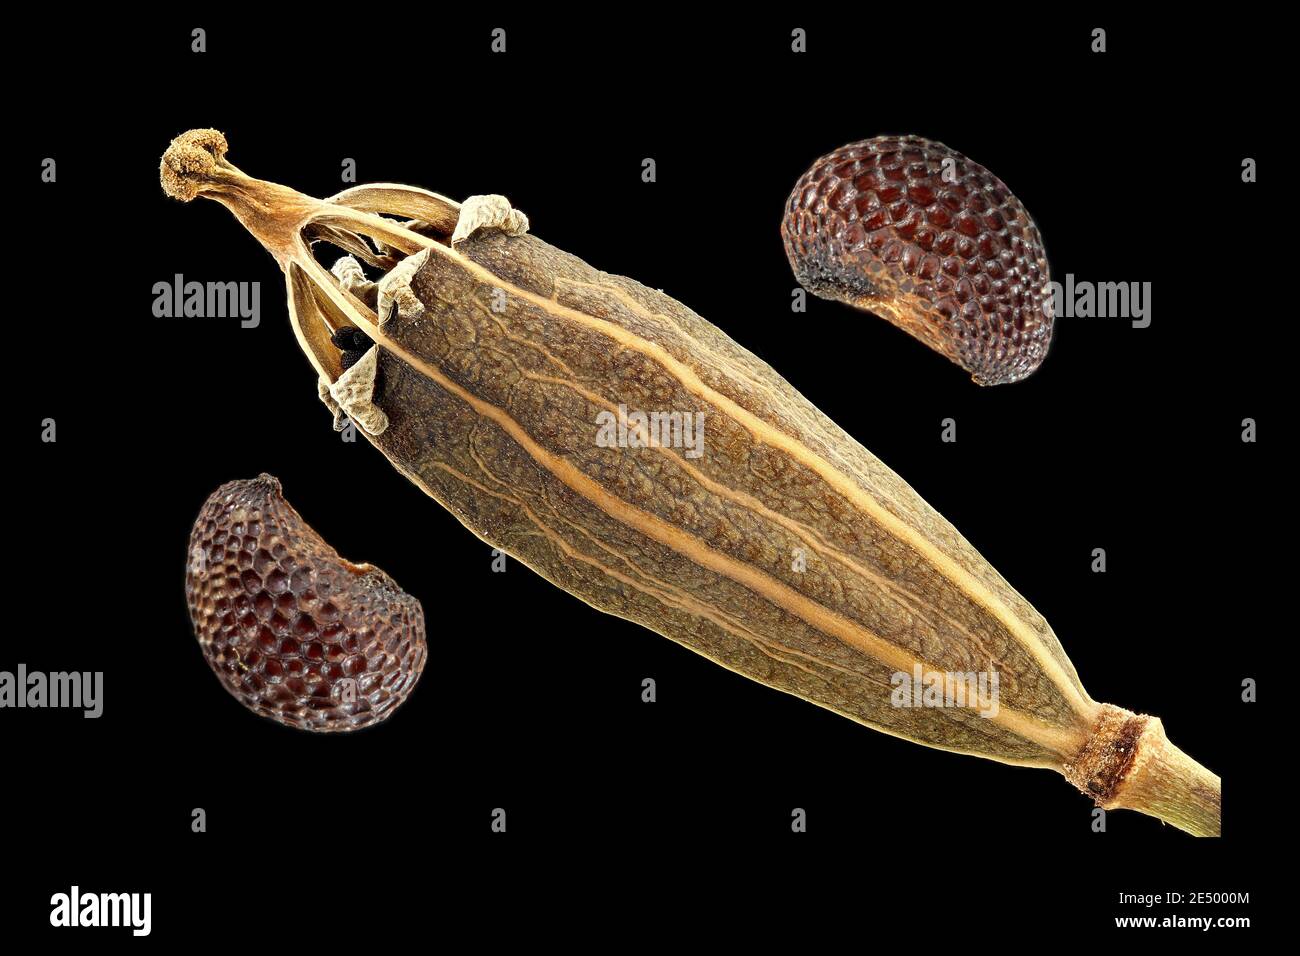 Meconopsis cambrica, Welsh poppy, Kambrischer Scheinmohn, close up, fruit, capsule, seeds Stock Photo